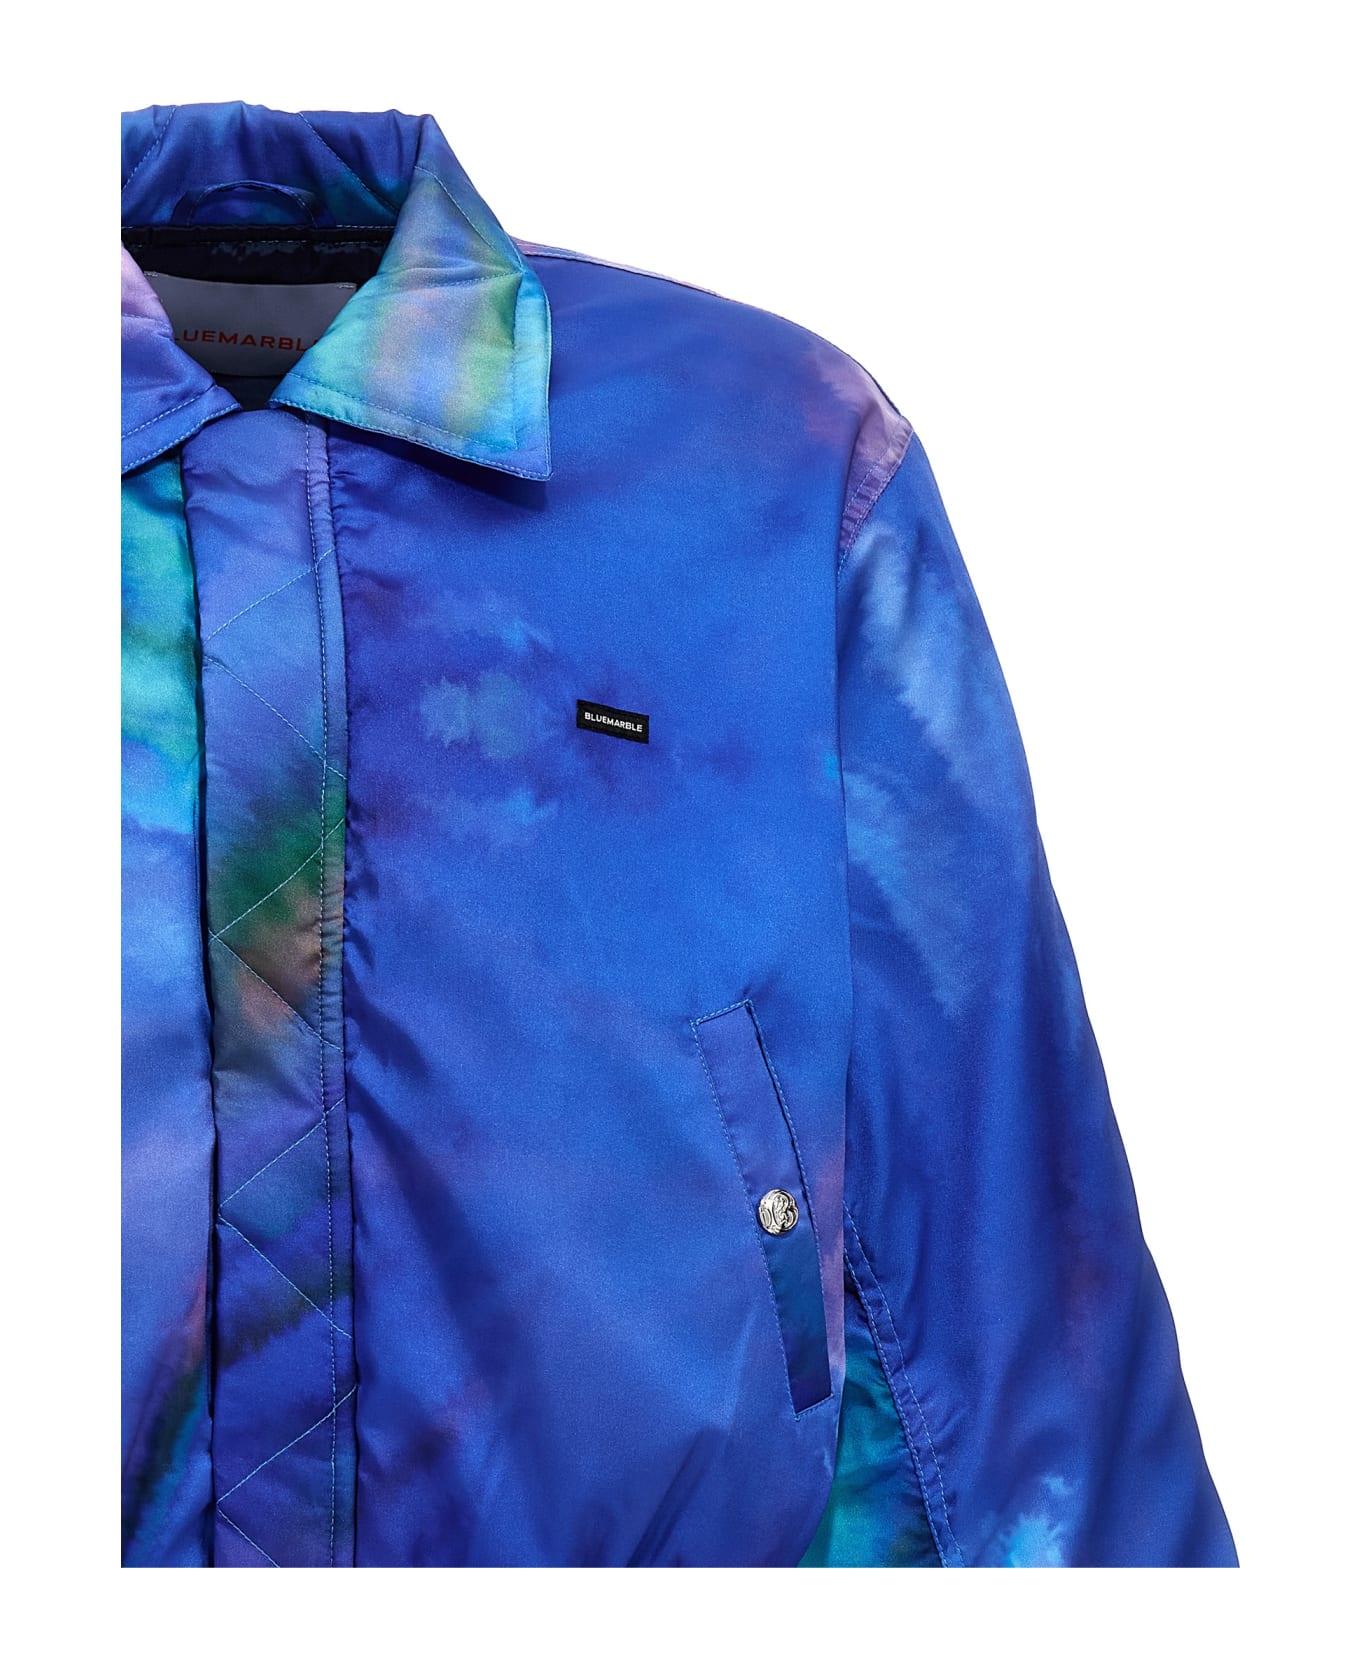 Bluemarble 'borealis Printed' Bomber Jacket - Multicolor